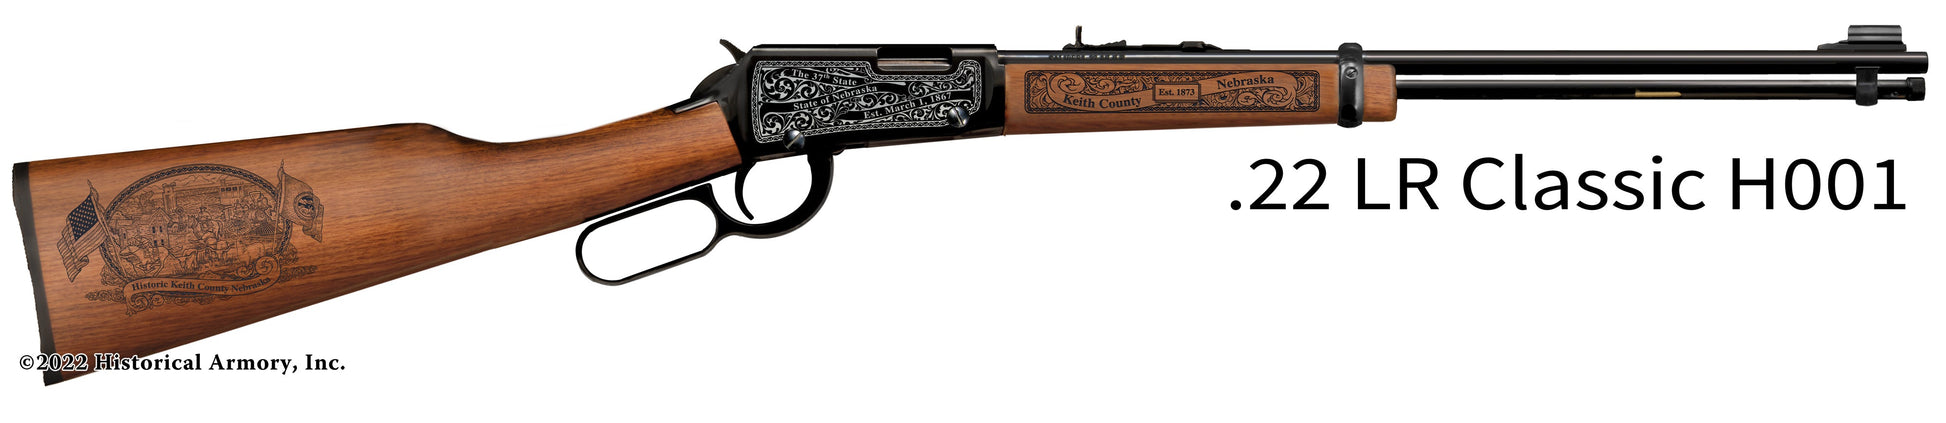 Keith County Nebraska Engraved Henry H001 Rifle